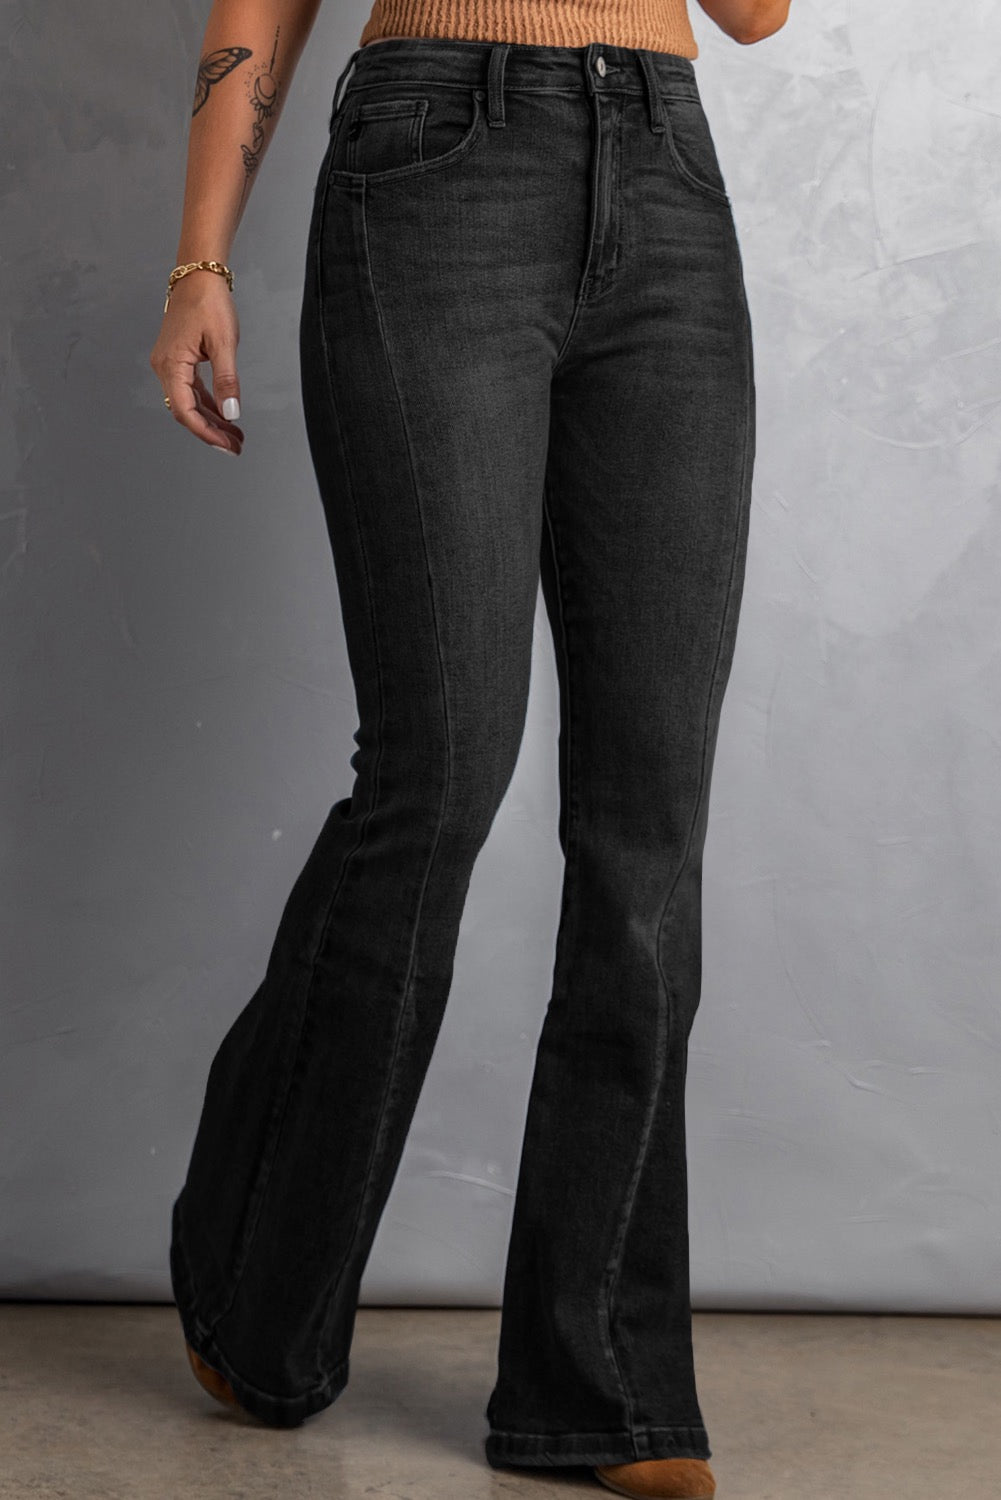 Black high waist flare jean with pockets – D'vine Designs